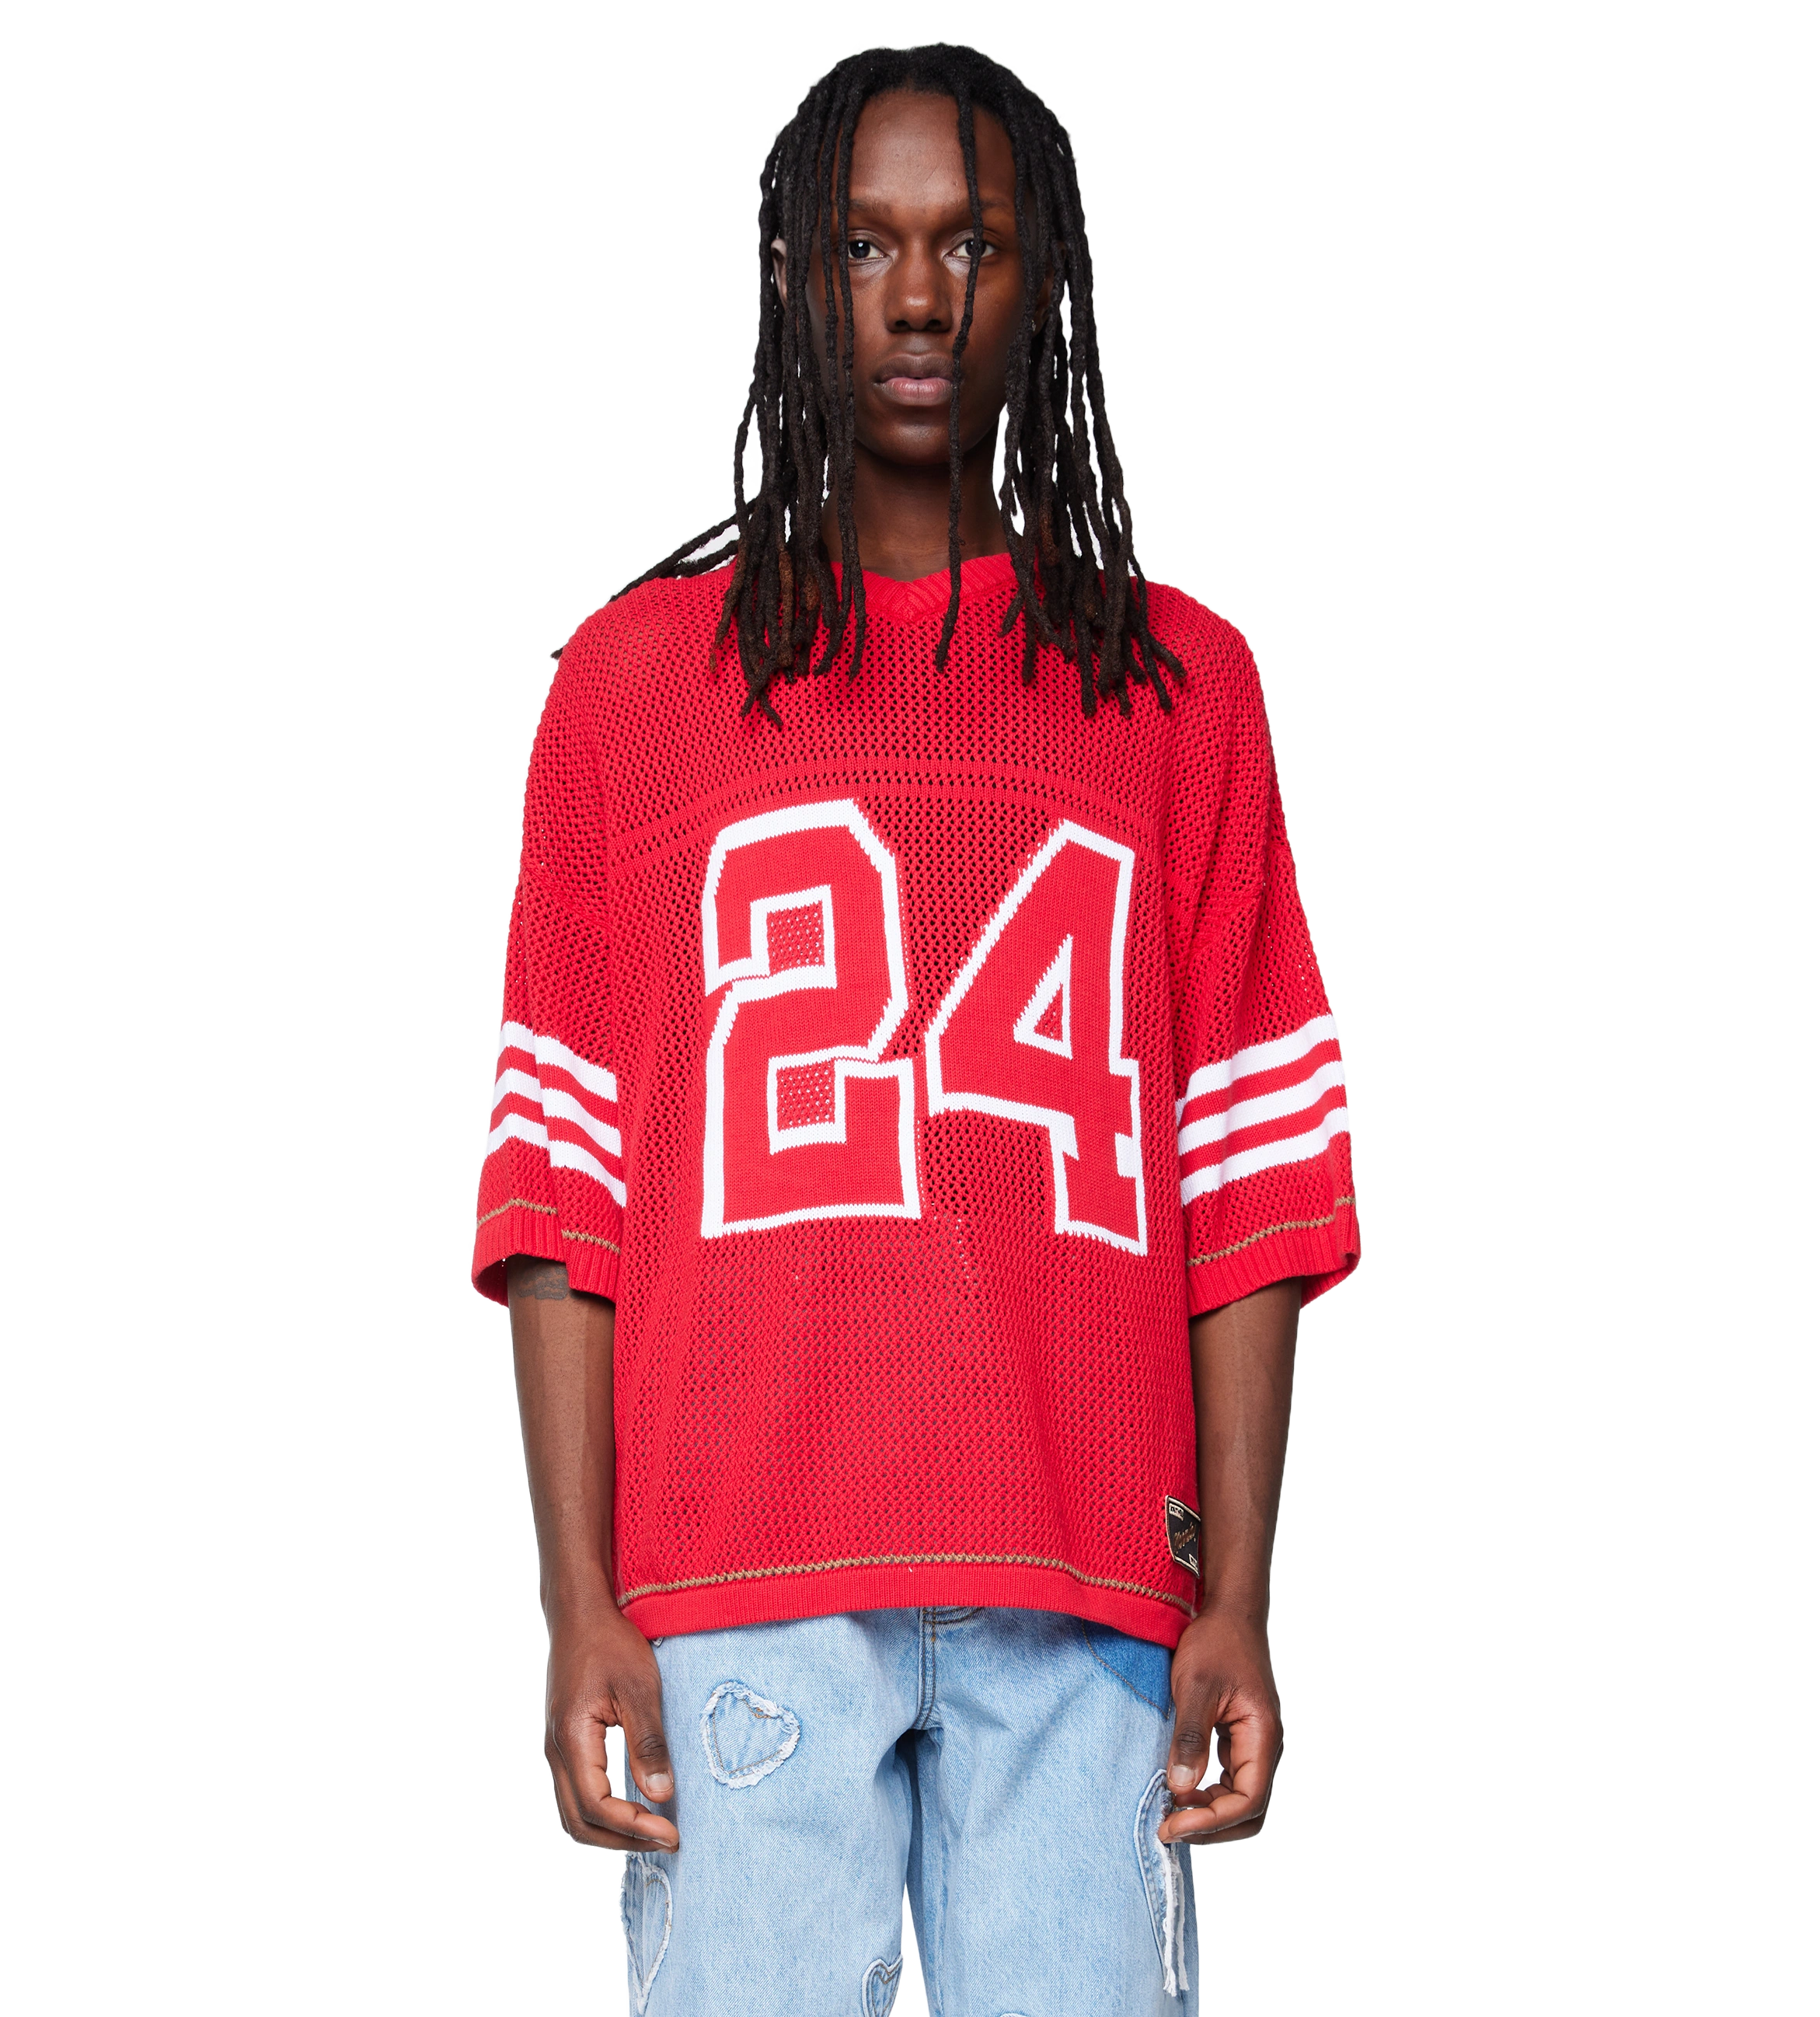 Knit 24 Football Shirt Red